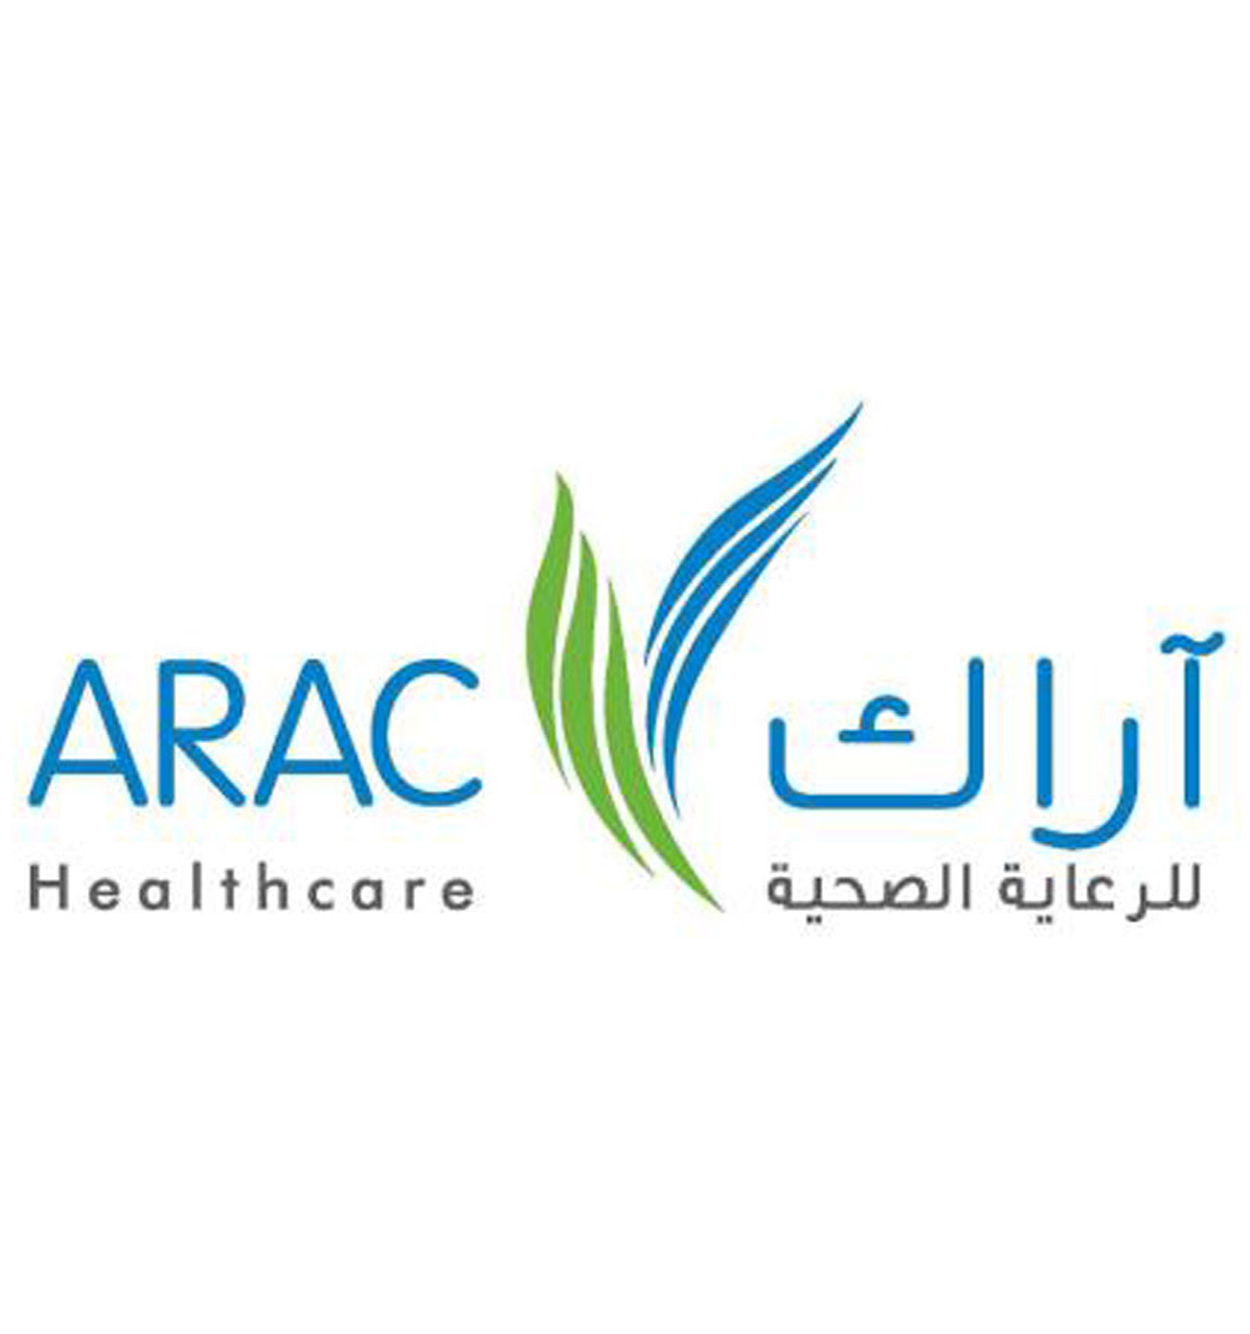 Arac Healthcare